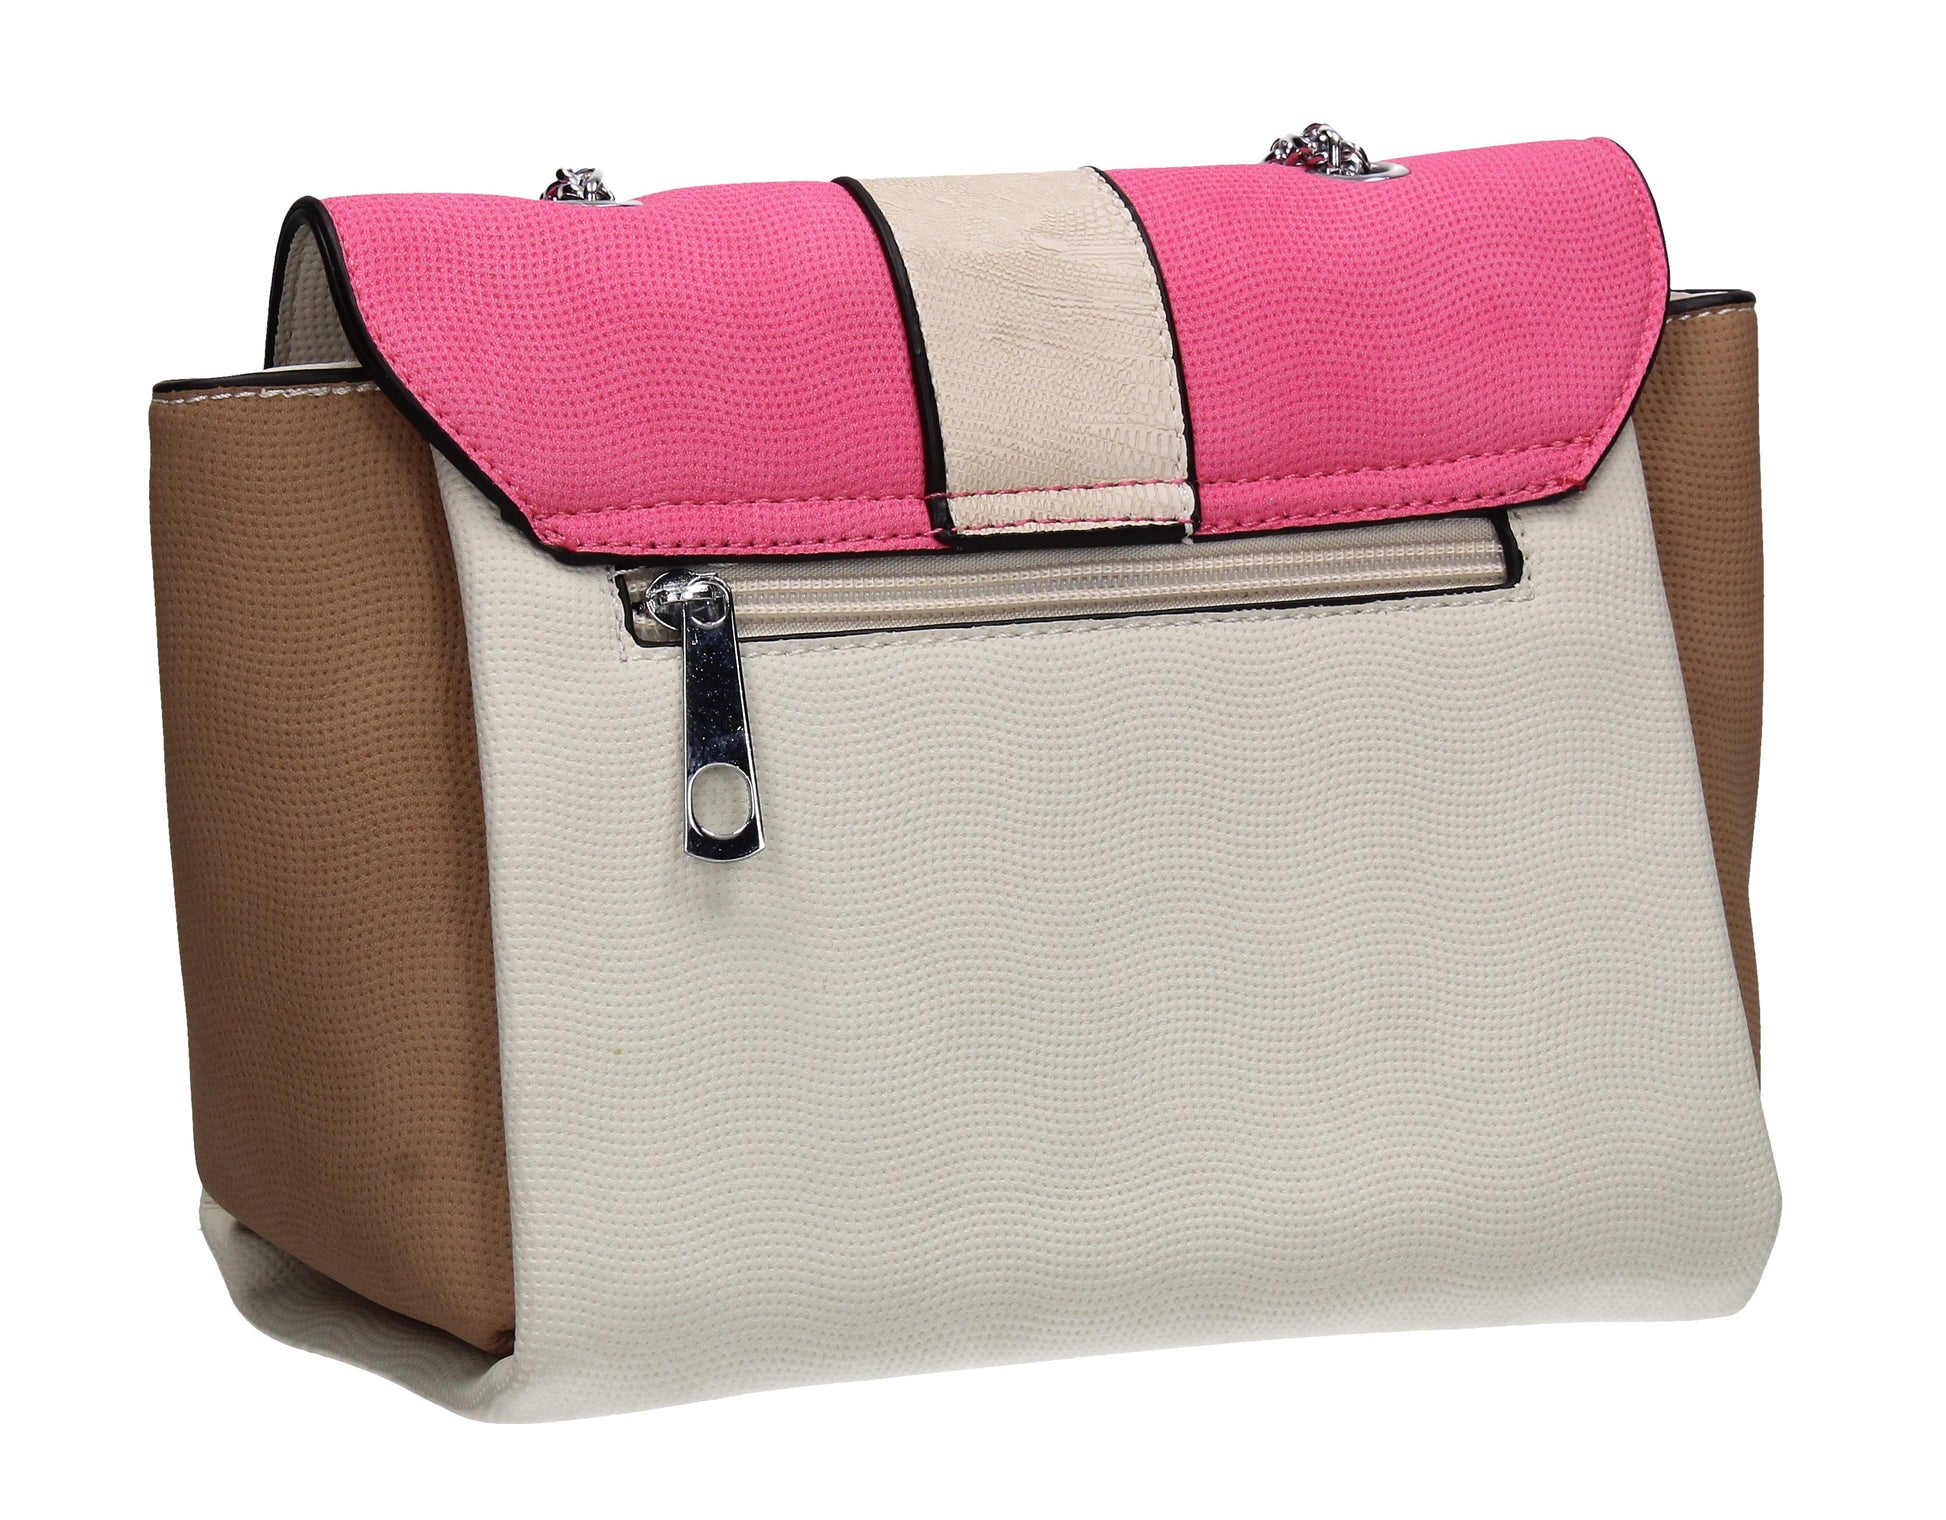 Sears Two Tone Handbag PearlBeautiful Cute Animal Faux Leather Clutch Bag Handles Strap Summer School